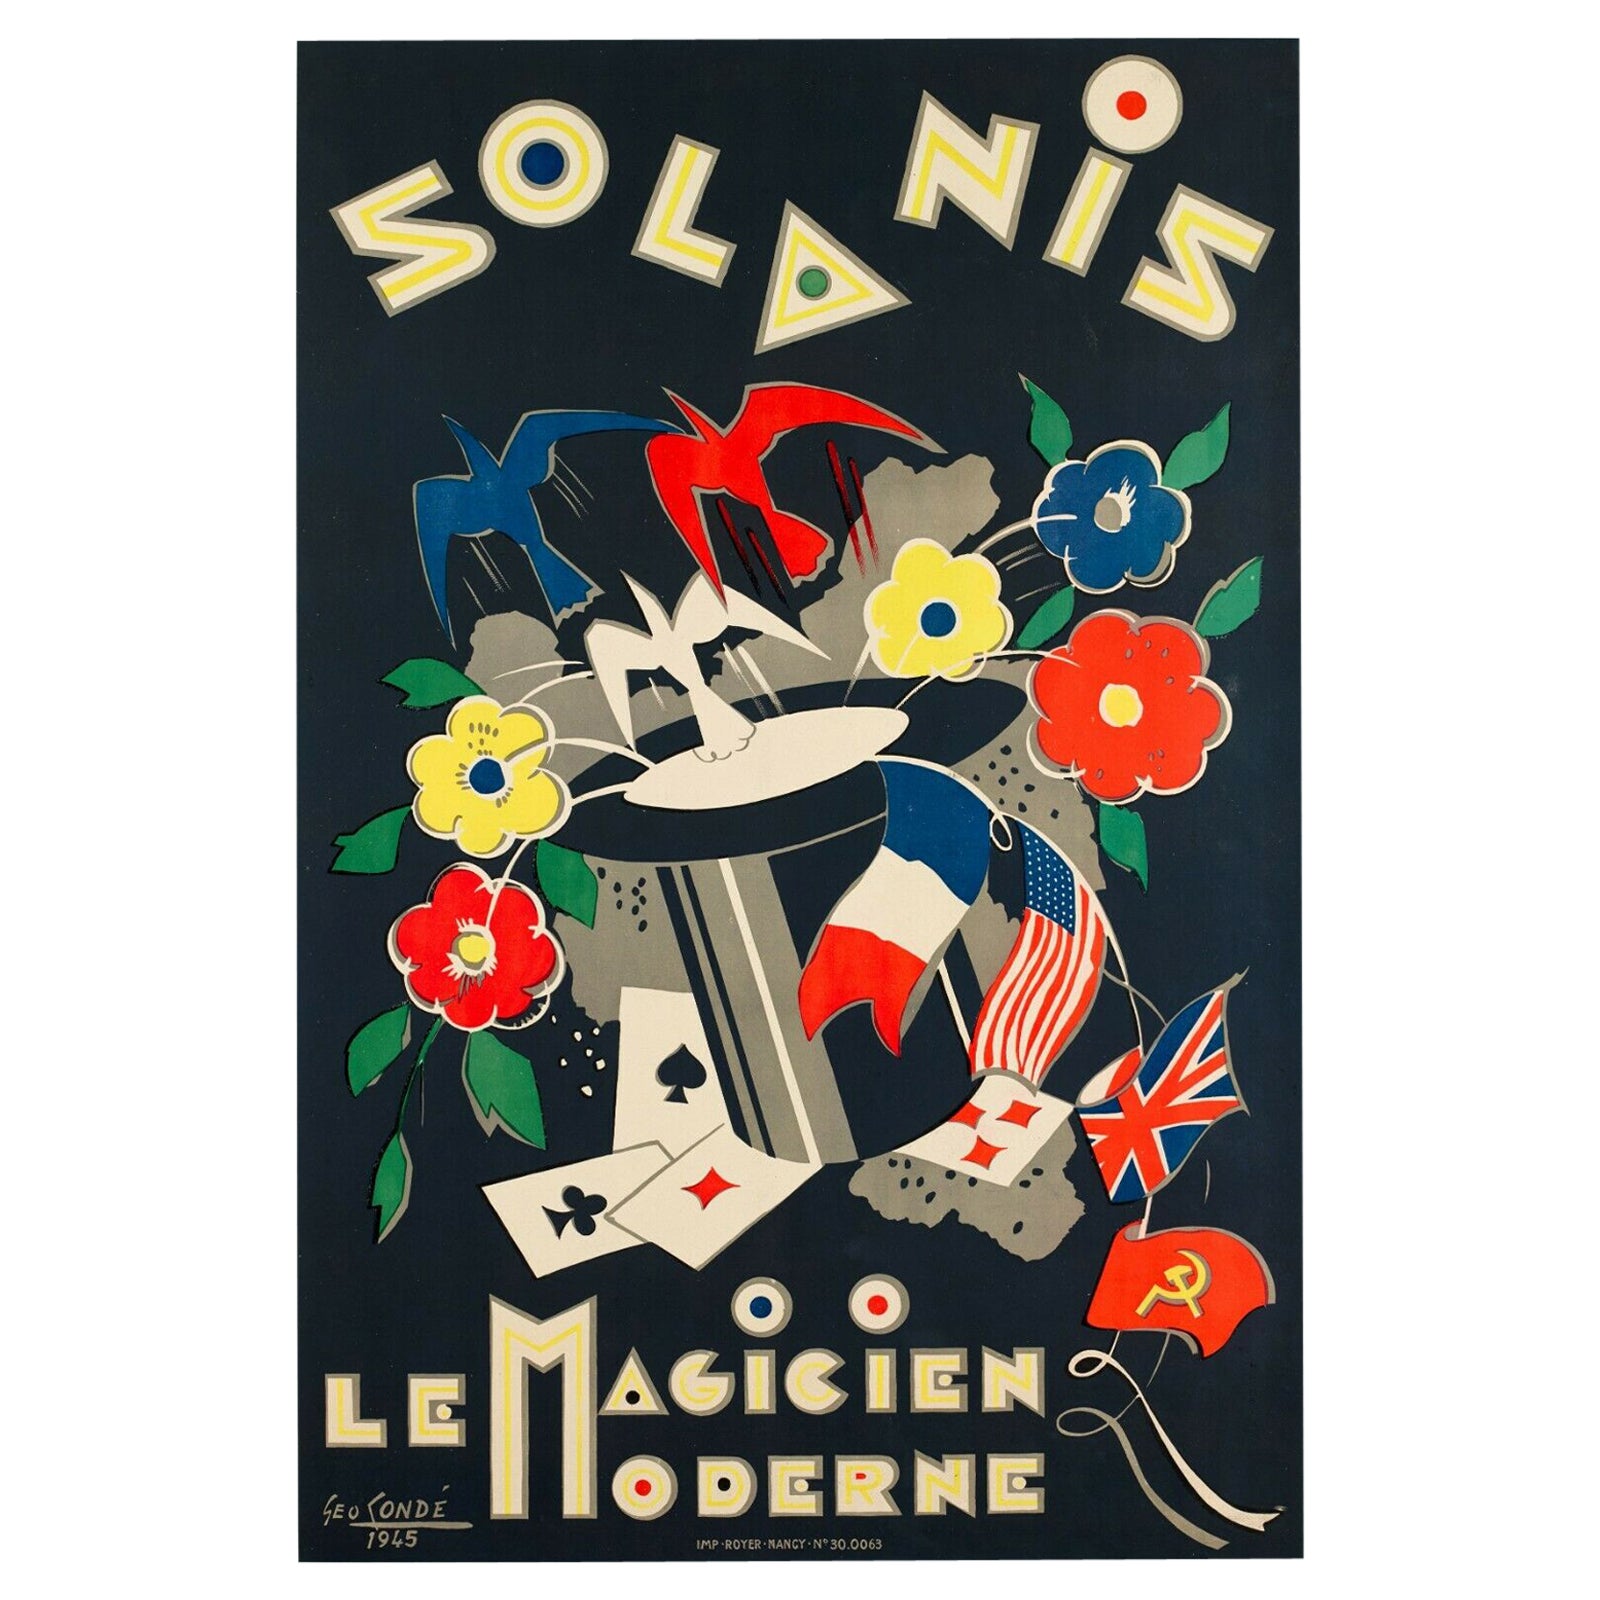 Original Poster-Geo Condé-Solanis Magician-Dove-Map, Flag, 1945 For Sale